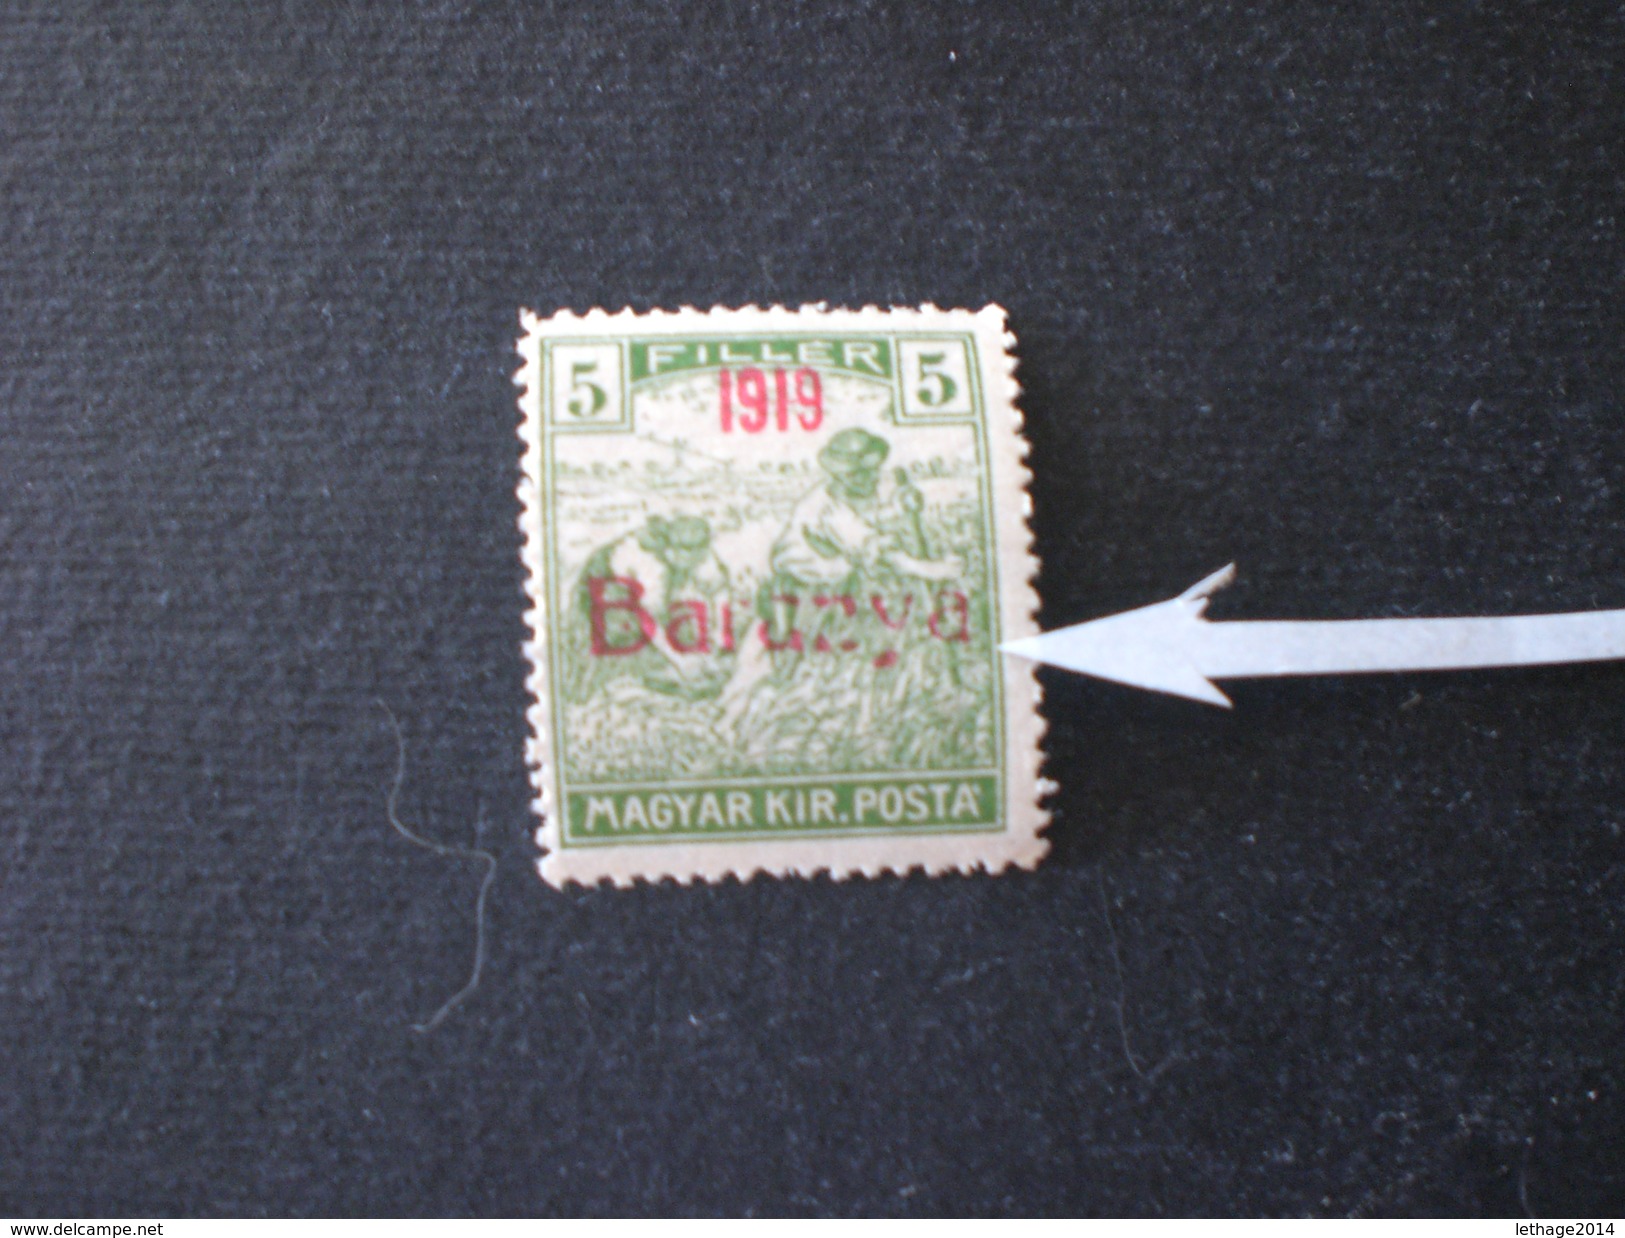 Magyarorszag UNGHERIA BARANYA 1919 Hungarian Stamps Overprinted "1919 Baranya" ERROR !! MNH - Baranya